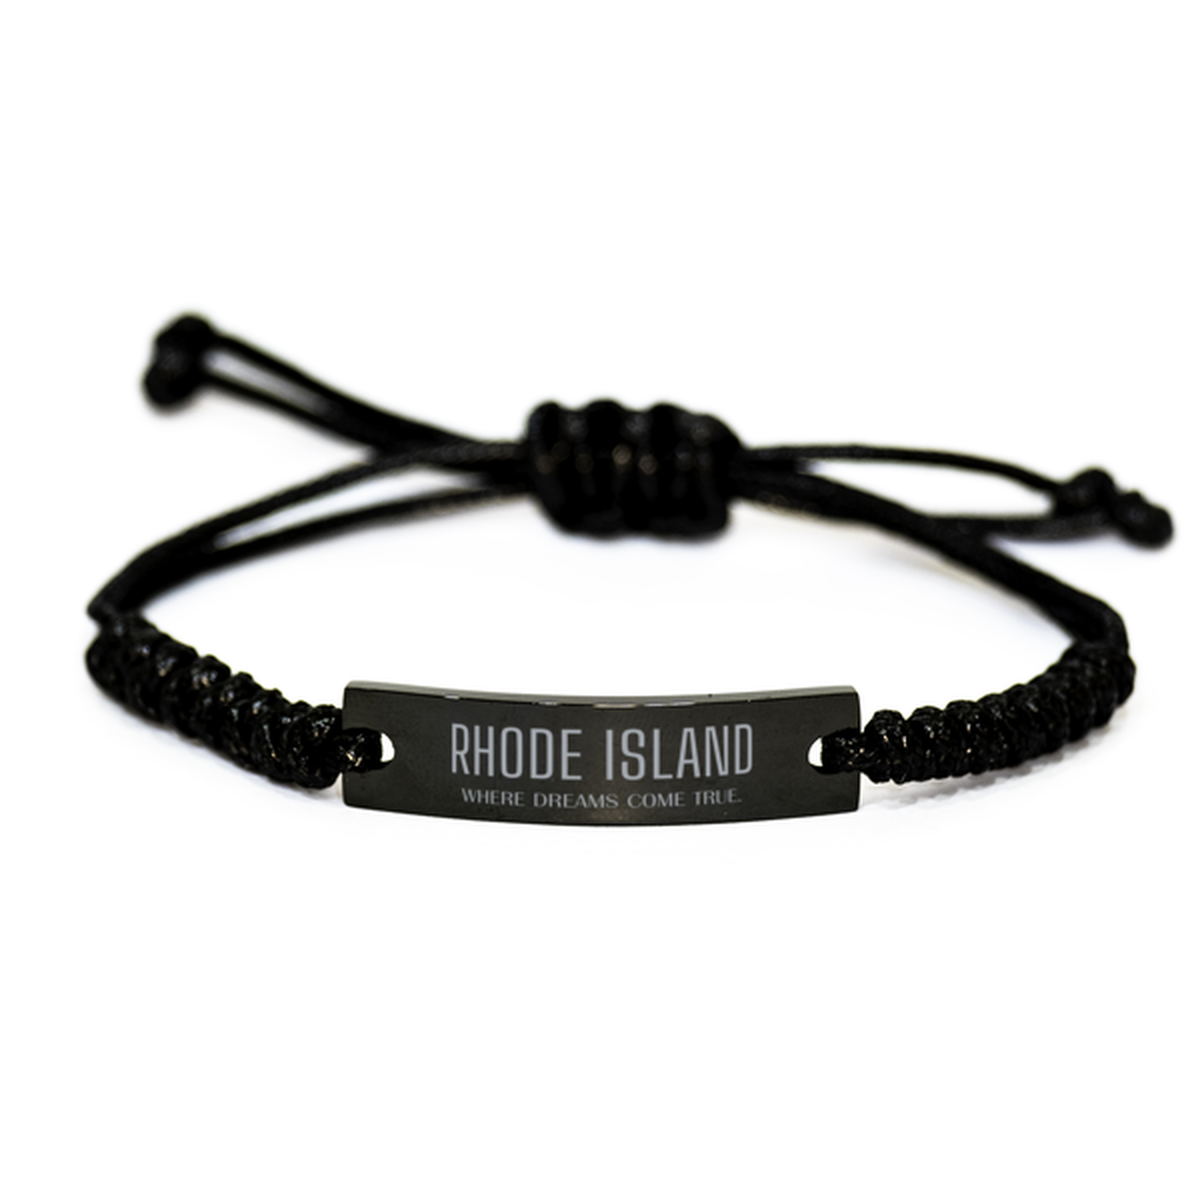 Love Rhode Island State Black Rope Bracelet, Rhode Island Where dreams come true, Birthday Inspirational Gifts For Rhode Island Men, Women, Friends